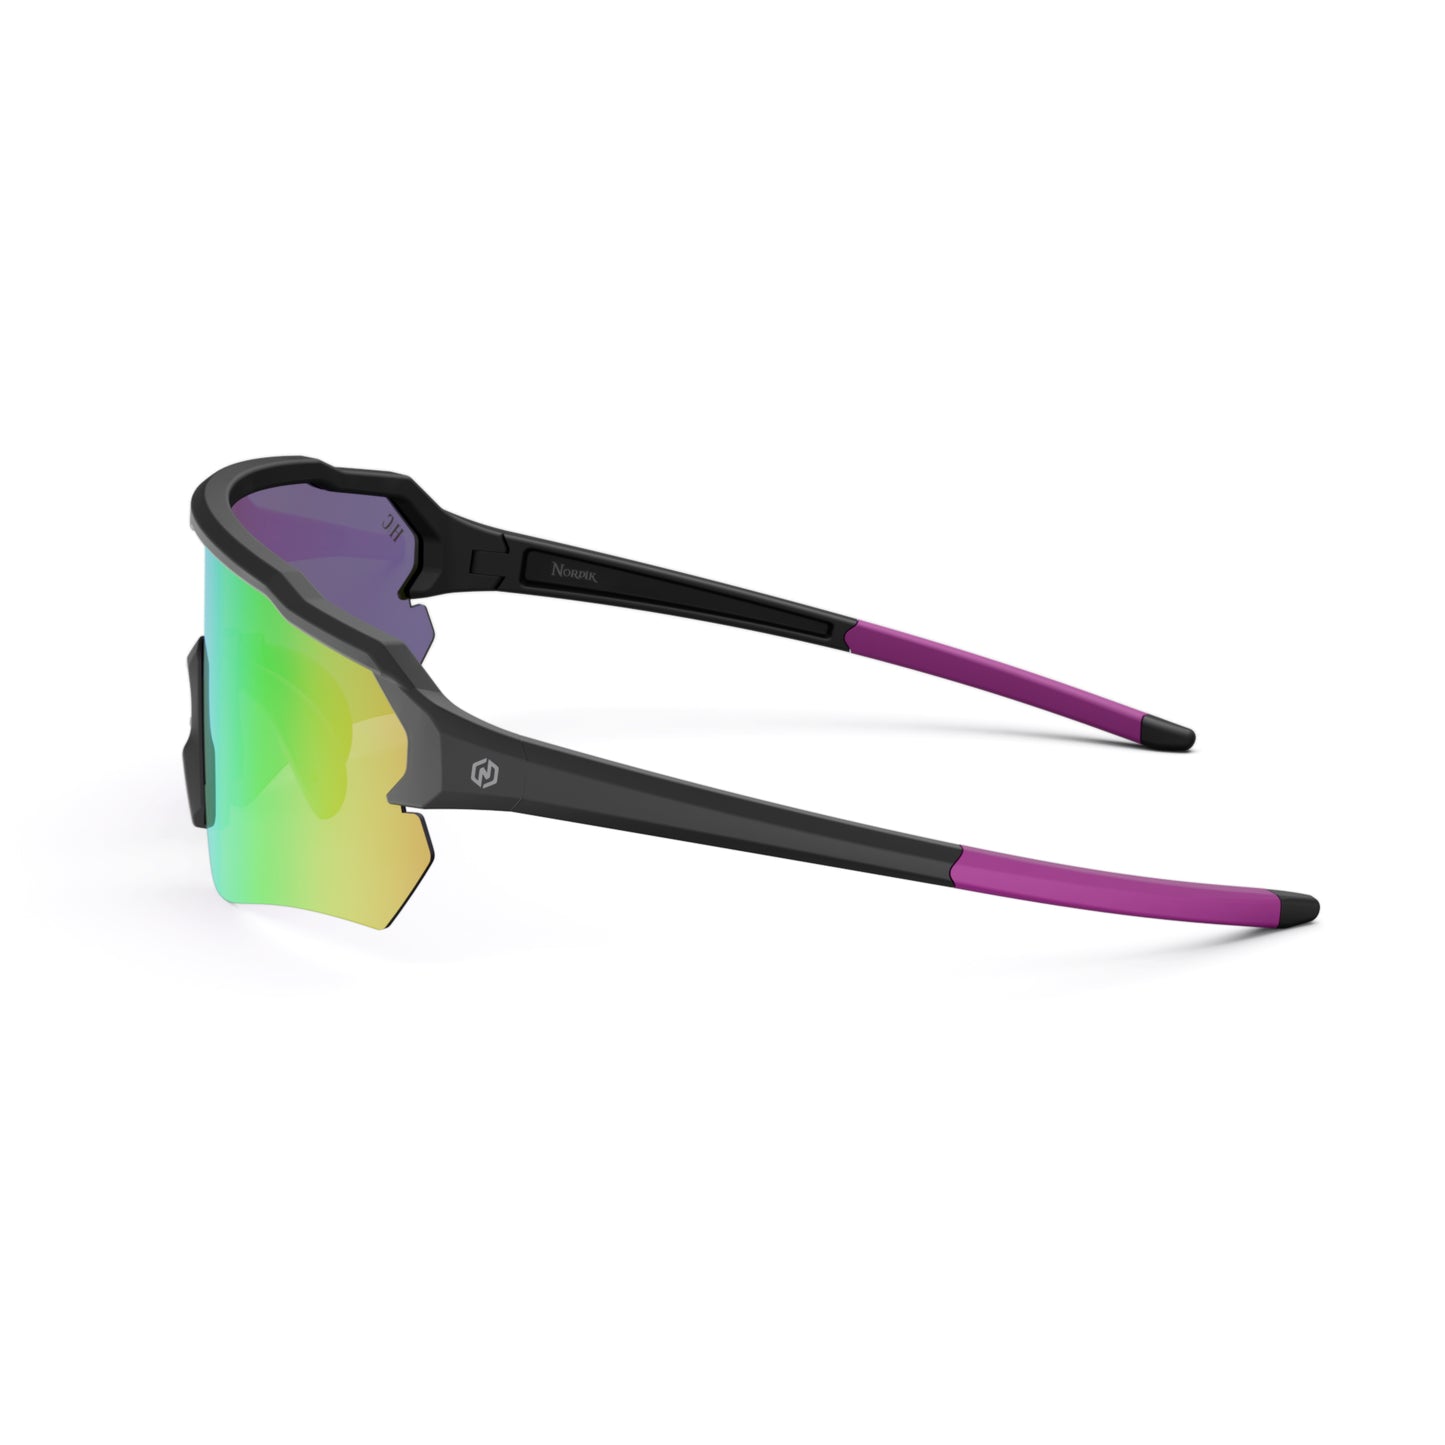 FRIGG 2 Cycling/Running Sunglasses